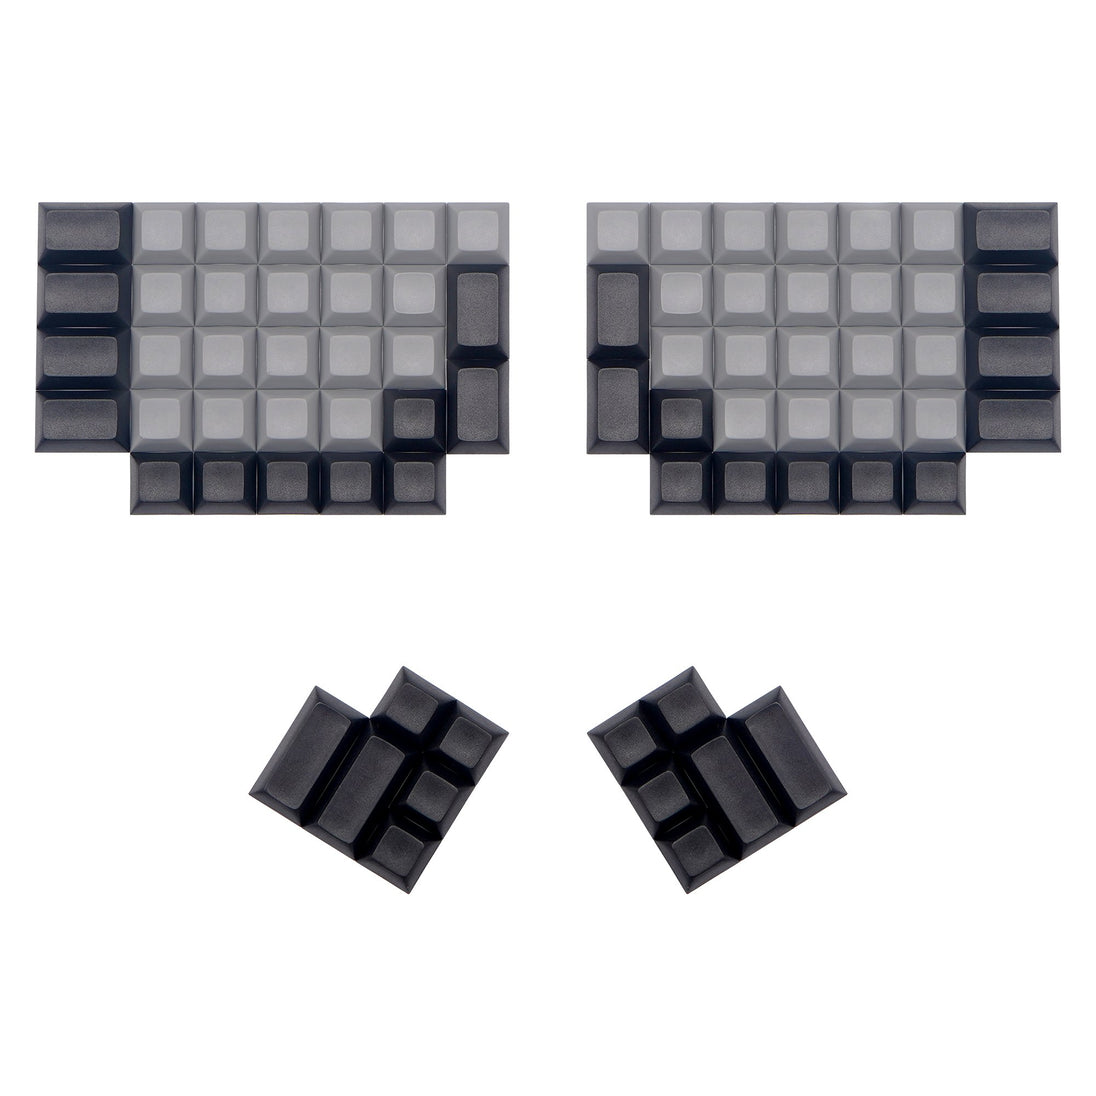 Split DSA Keycaps Black and Dark Grey